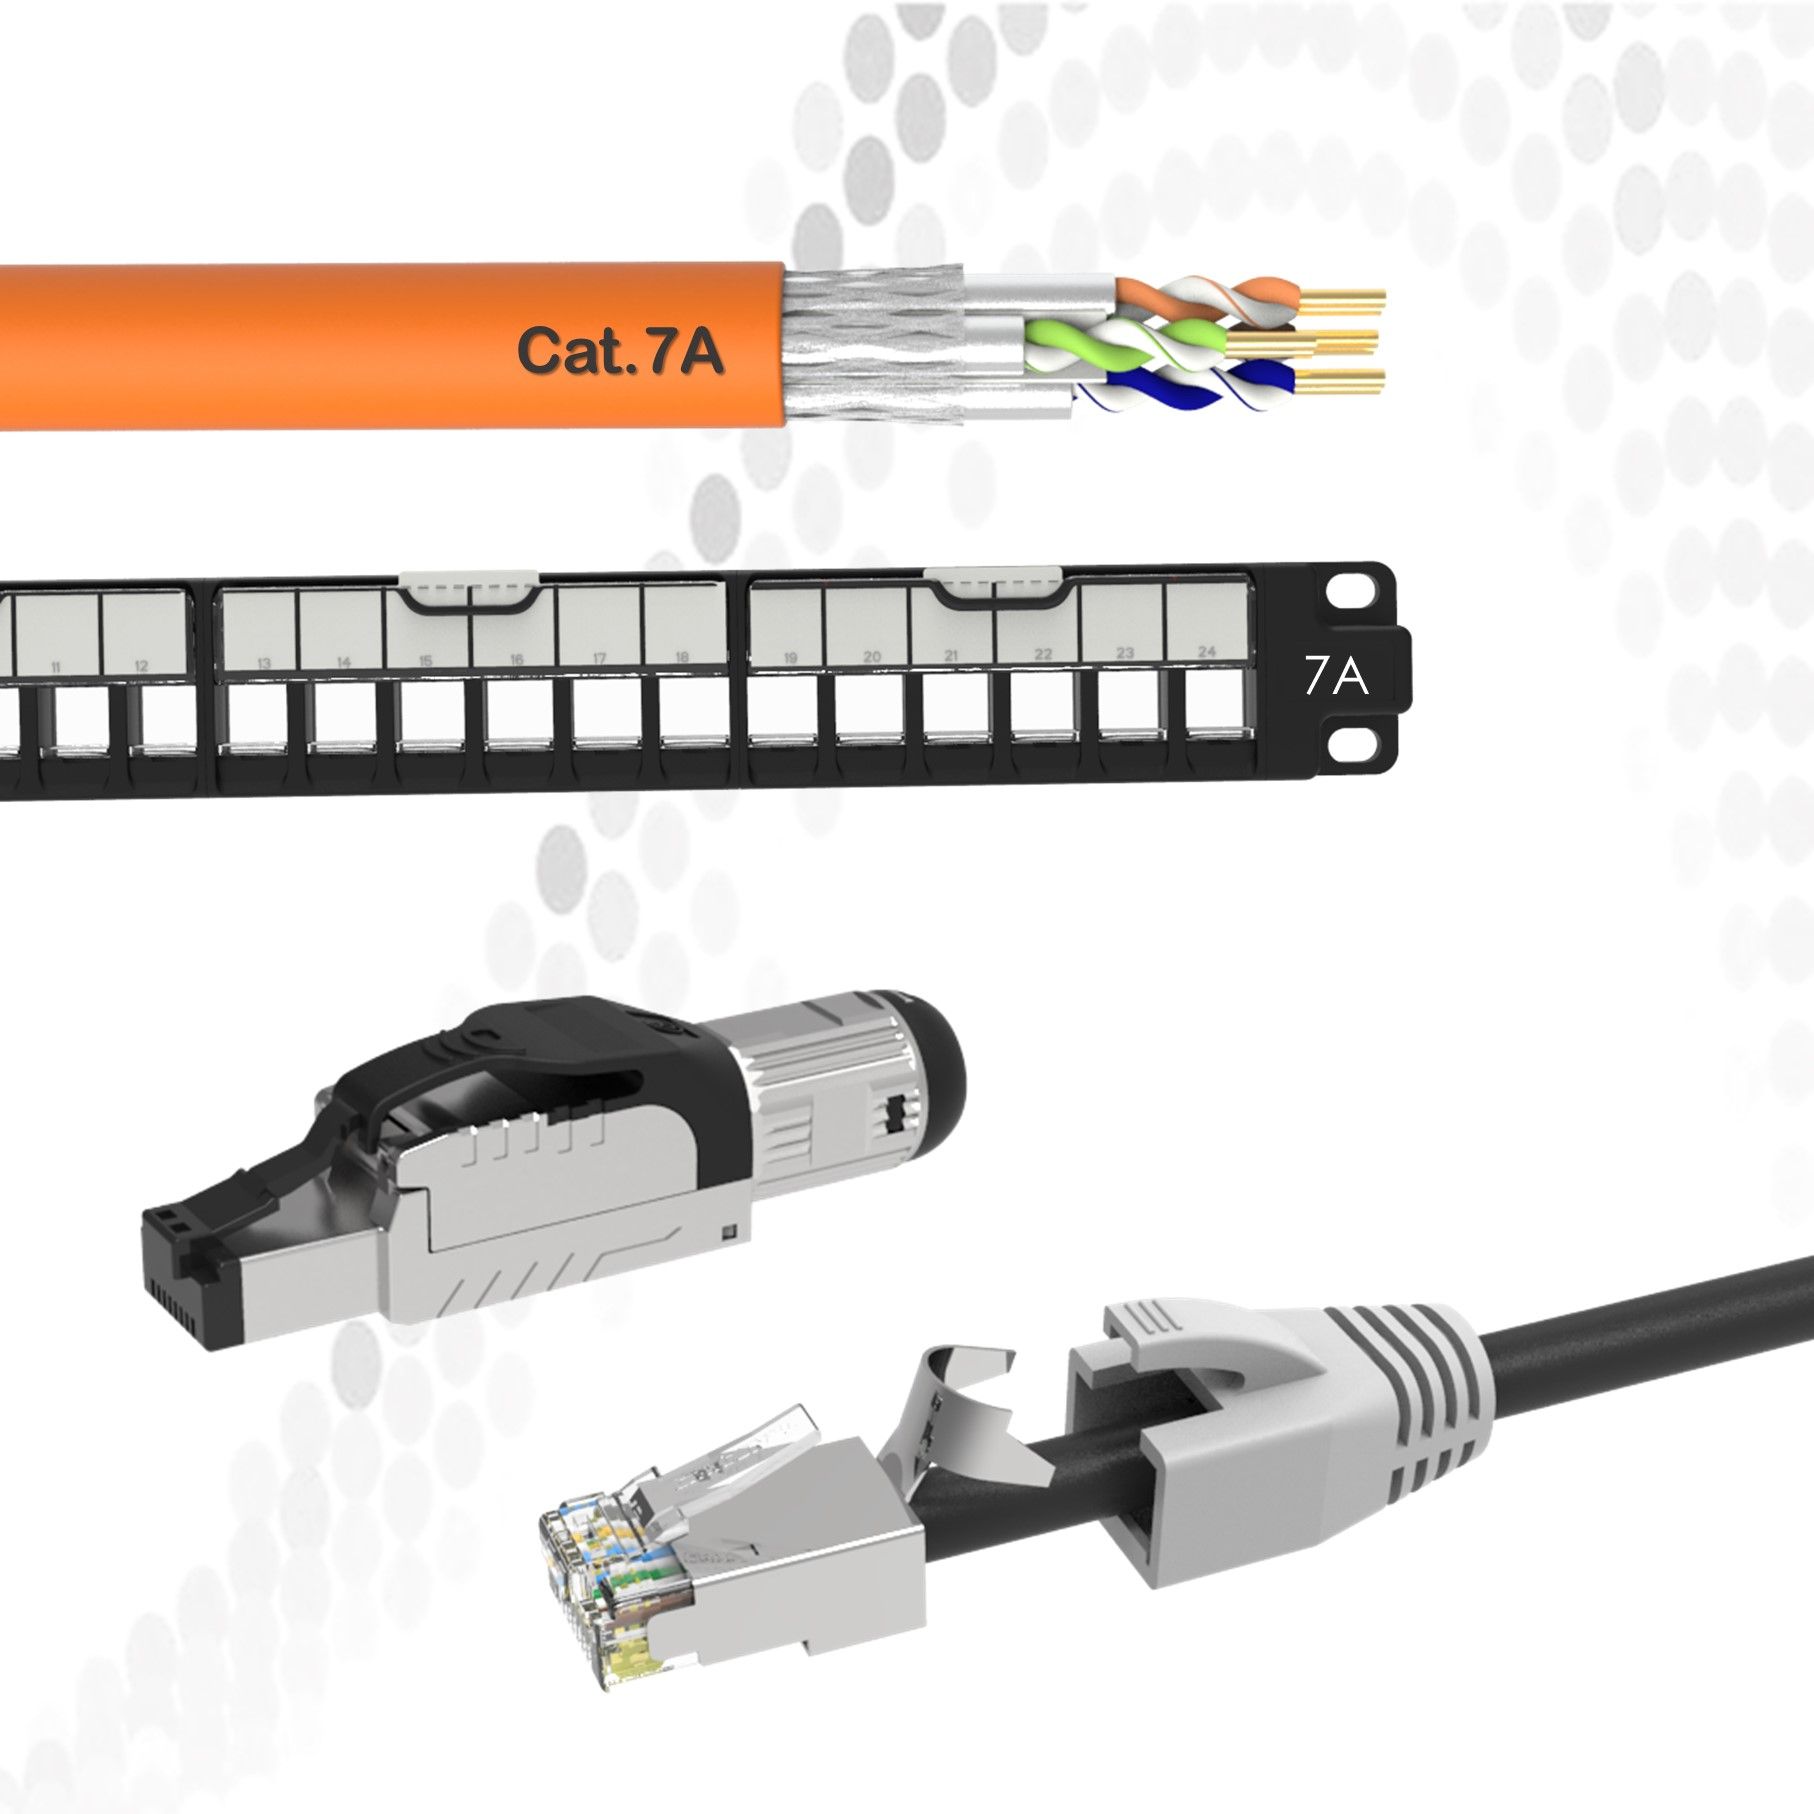 Cat8 Field Termination Plug, Cat7A Compatible